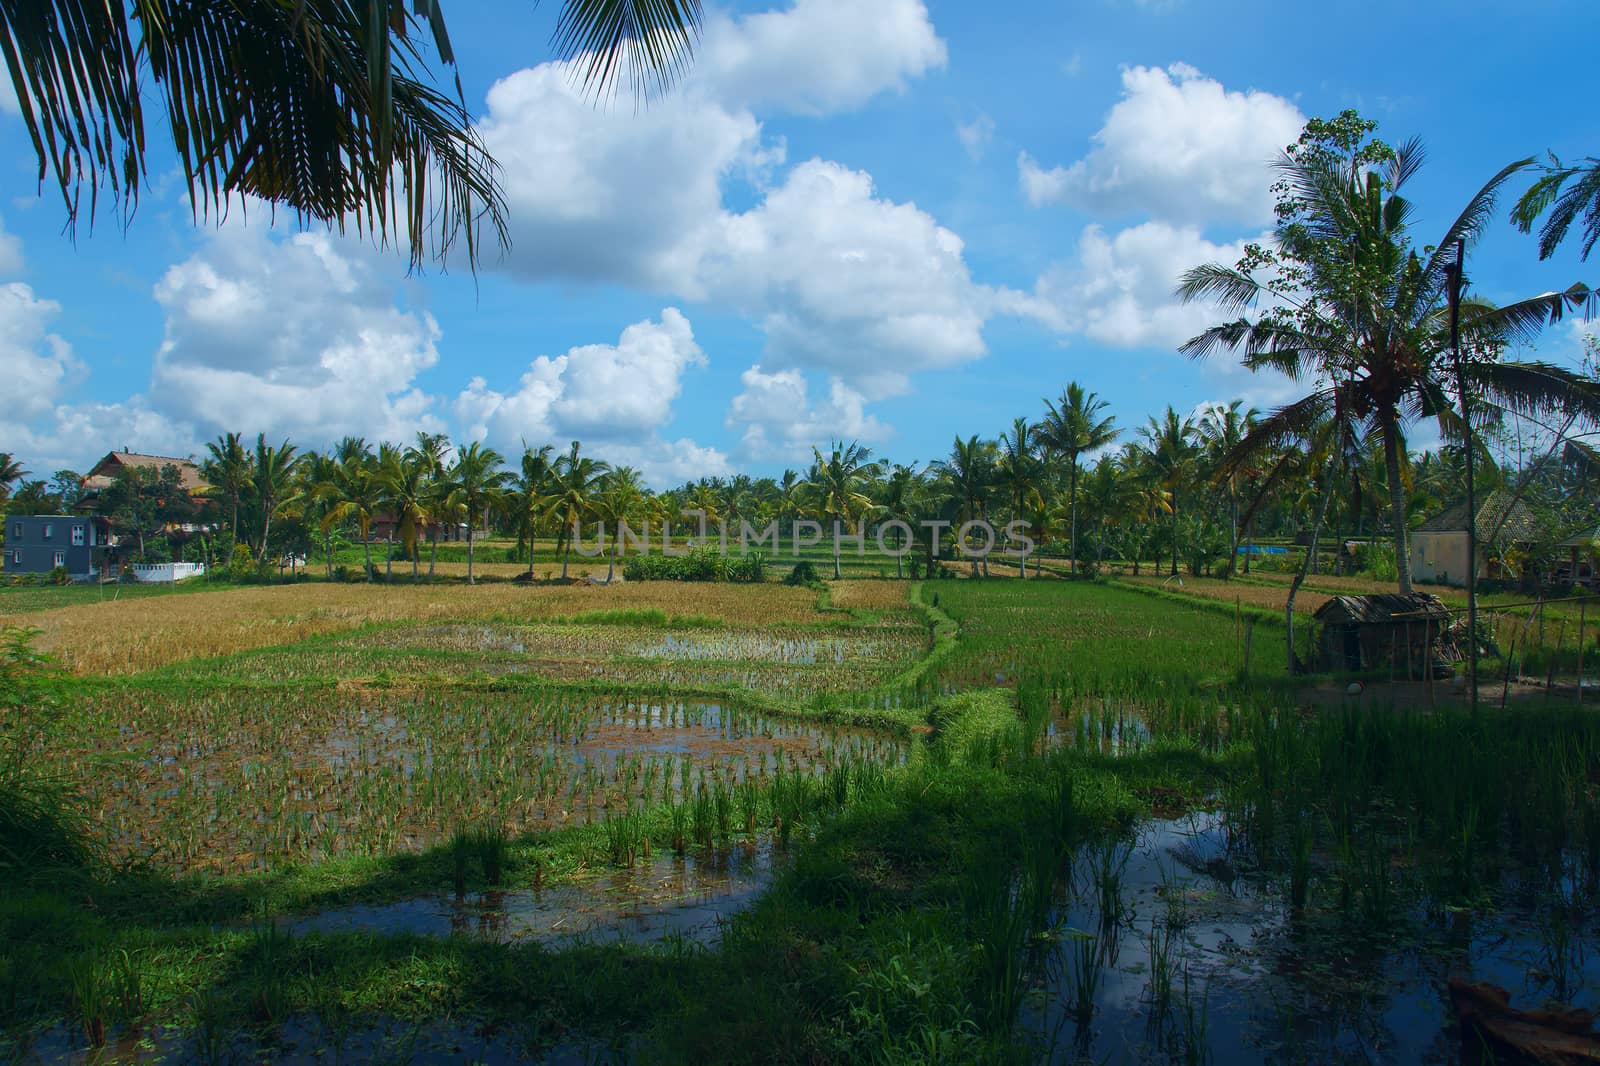 Rice field near the town of Ubud in Bali by BIG_TAU